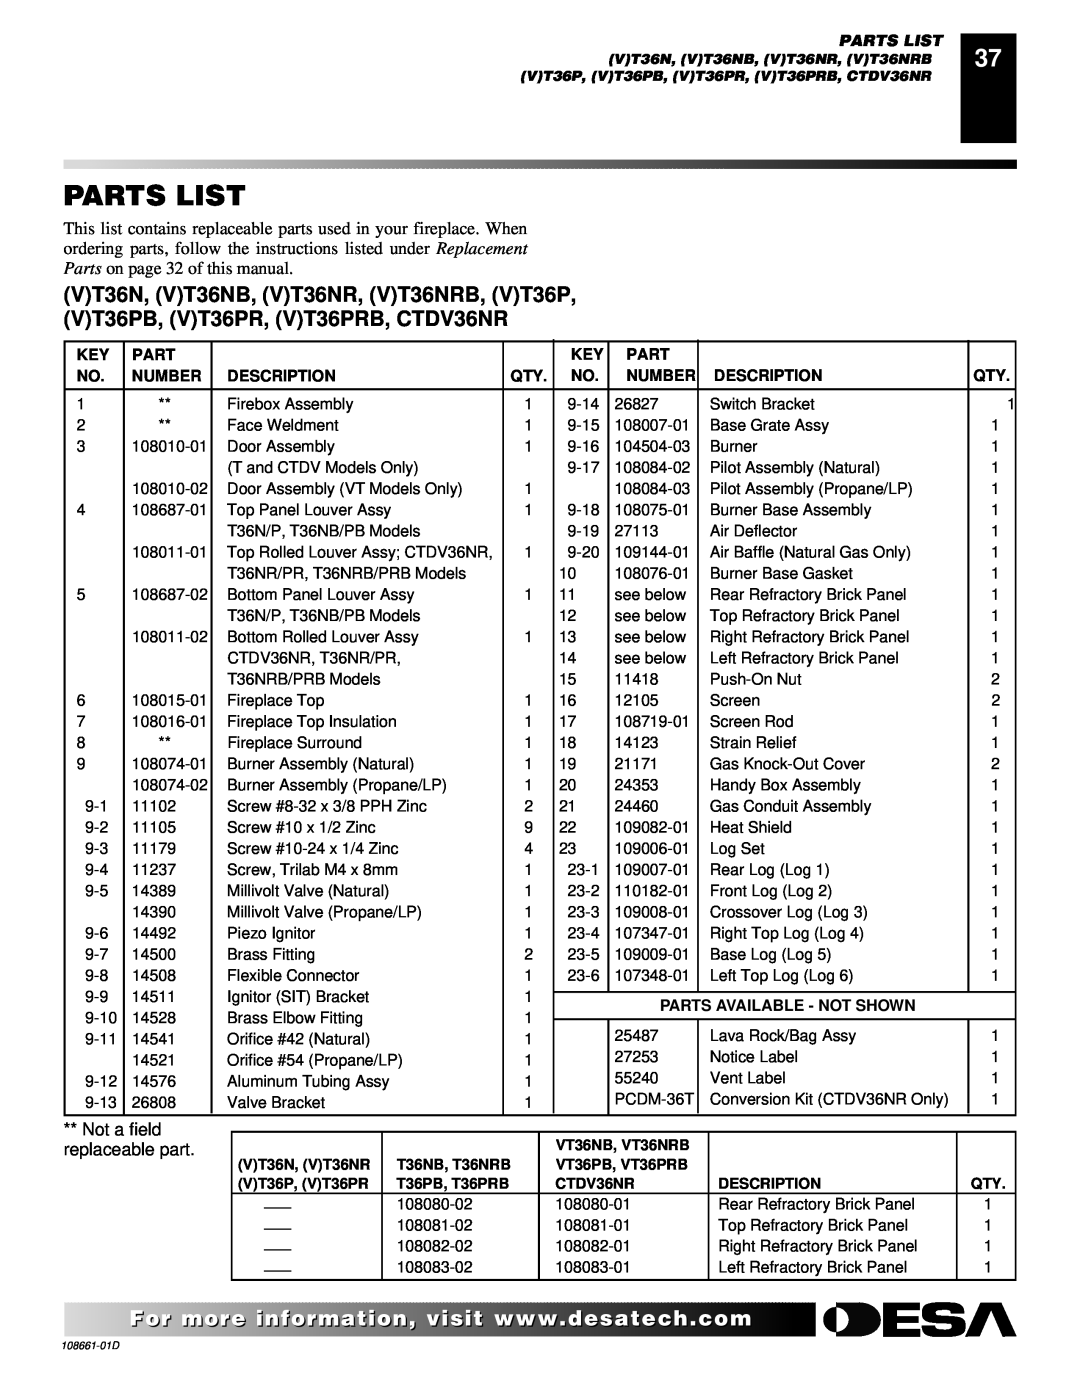 Desa (V)T36N SERIES, (V)T32N, CTDV36NR installation manual Parts List, Number, Description, Parts Available - Not Shown 